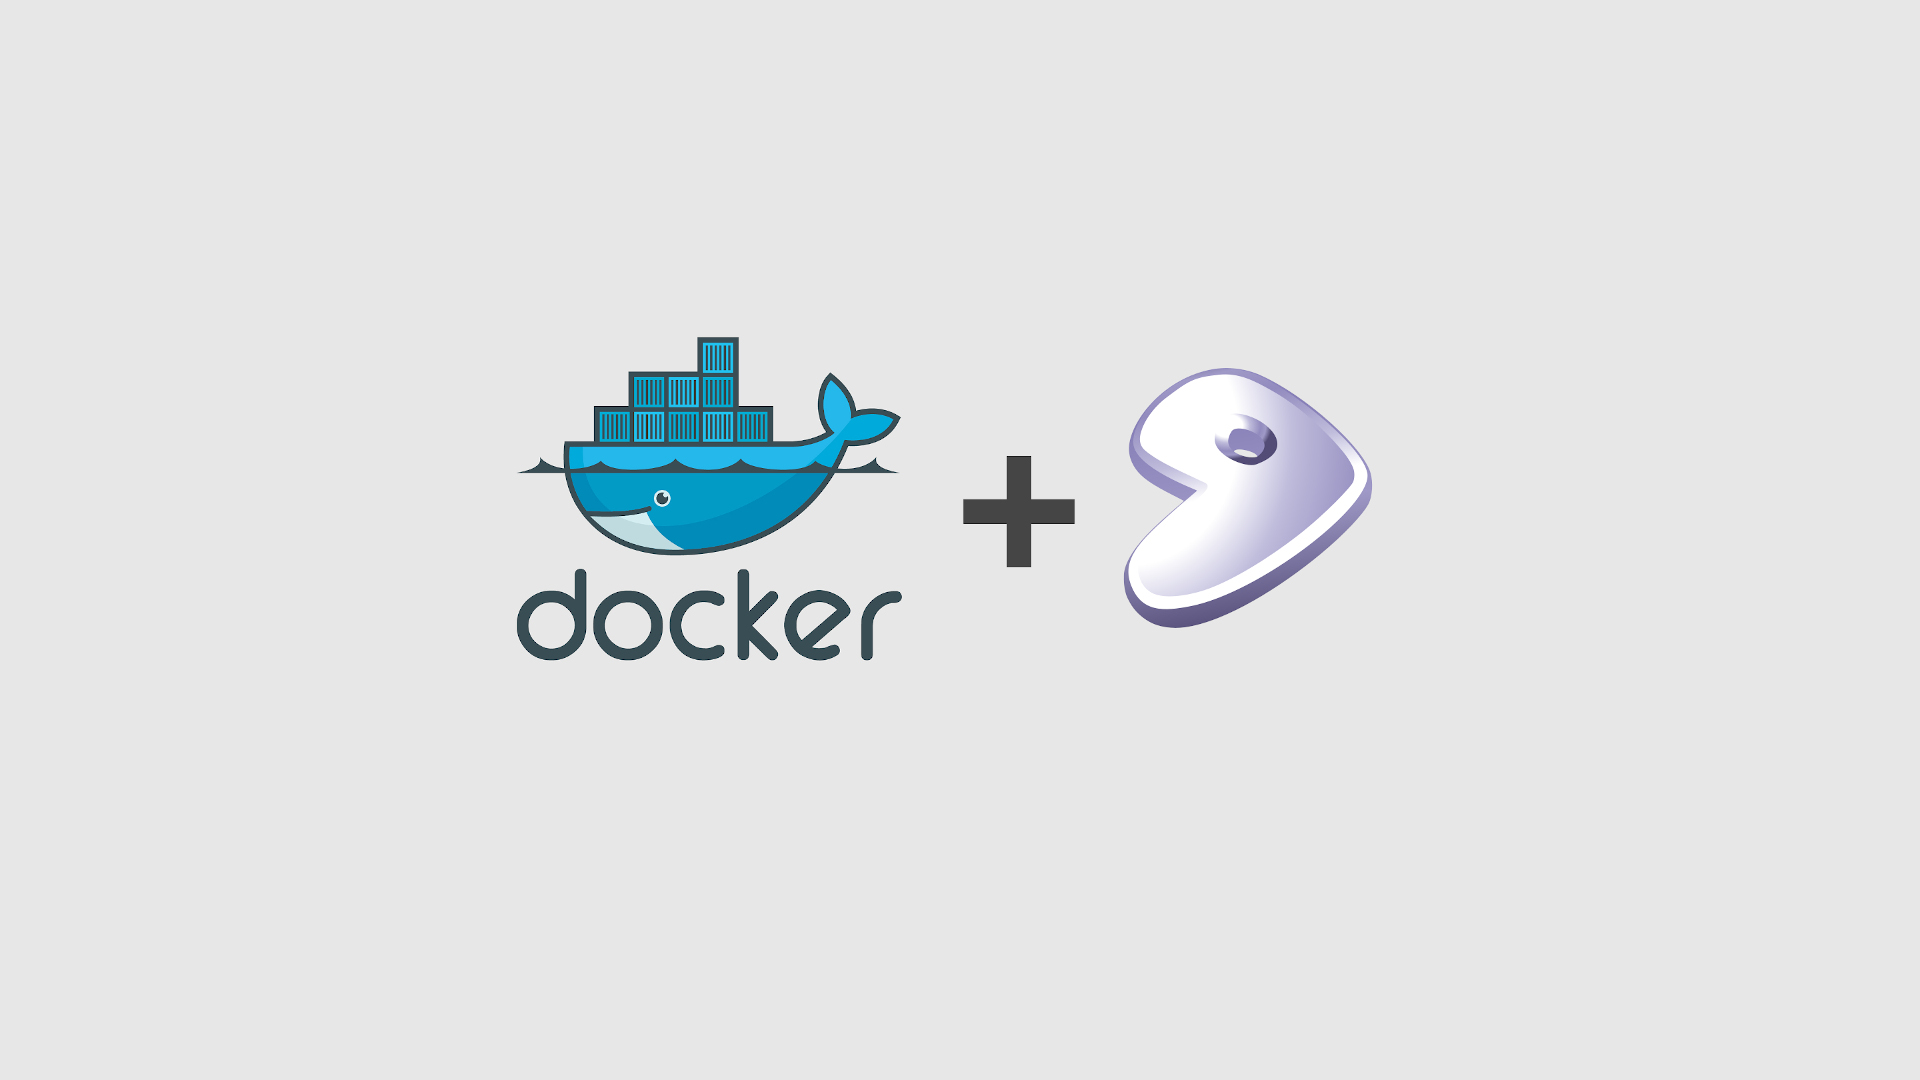 How to install Docker on Gentoo